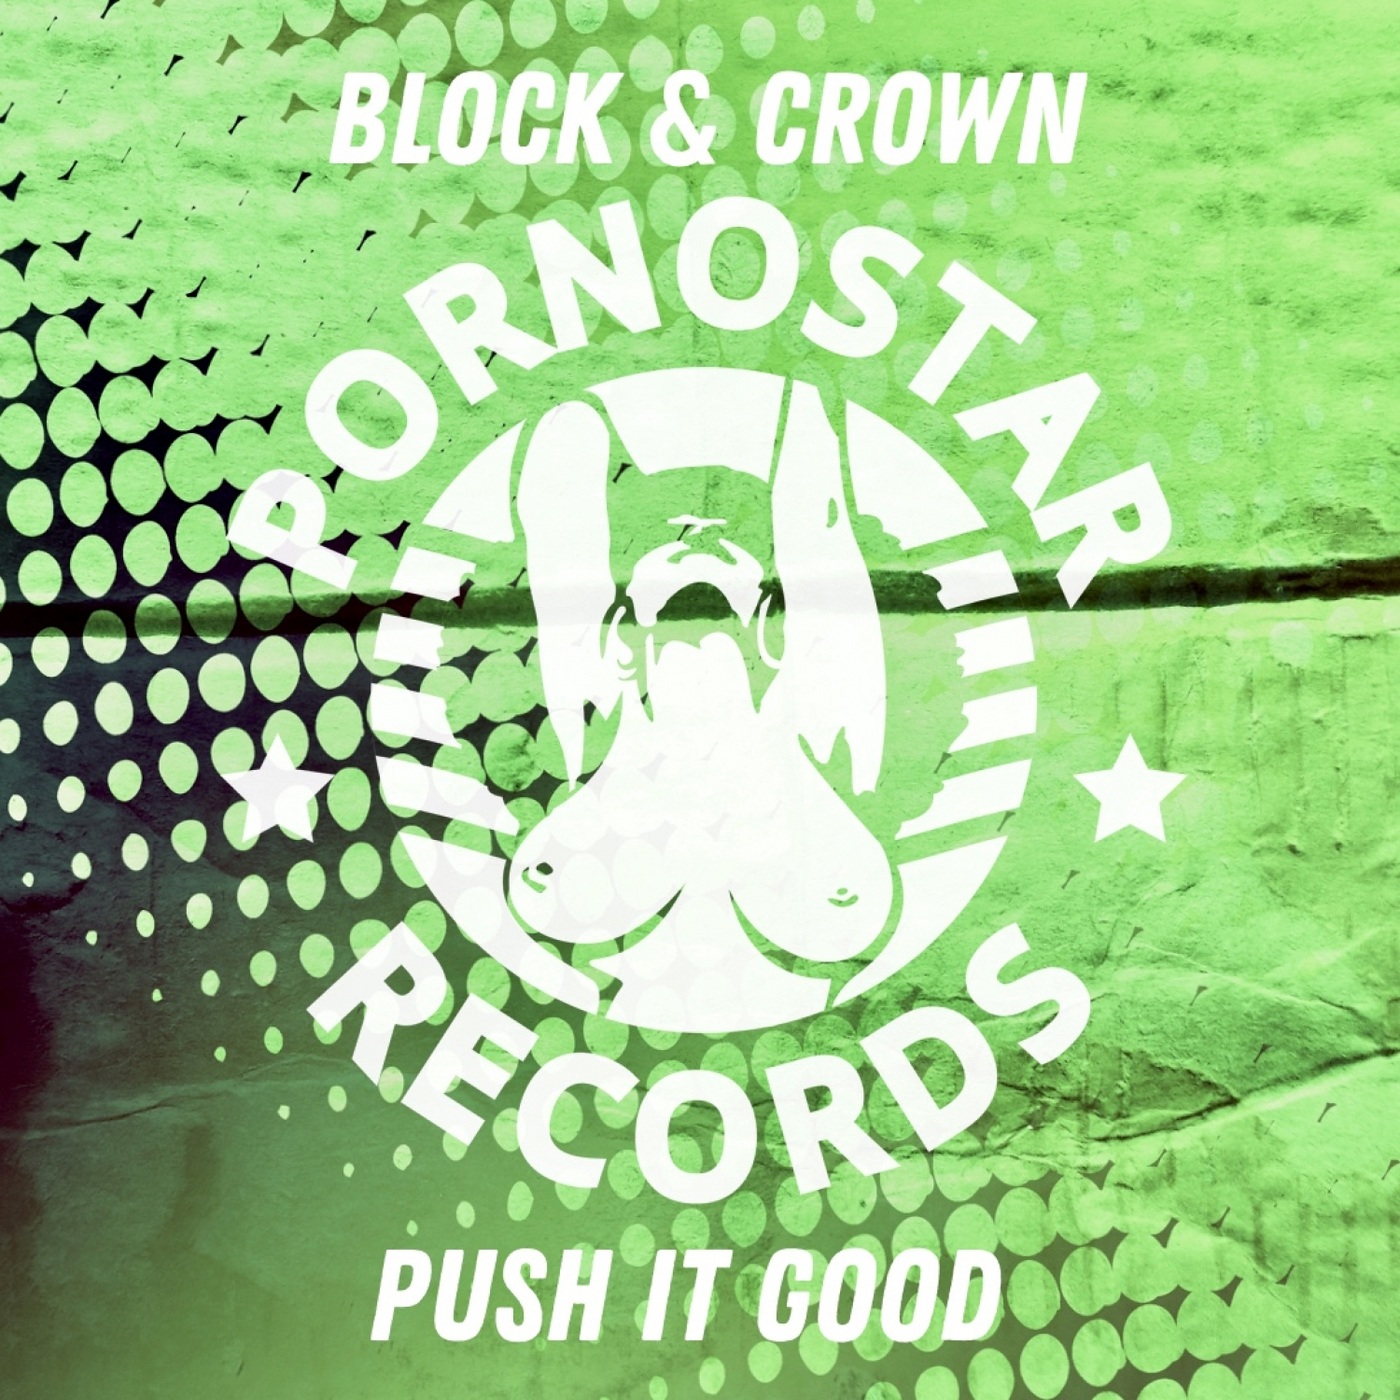 Block & Crown - Push It Good / PornoStar Records